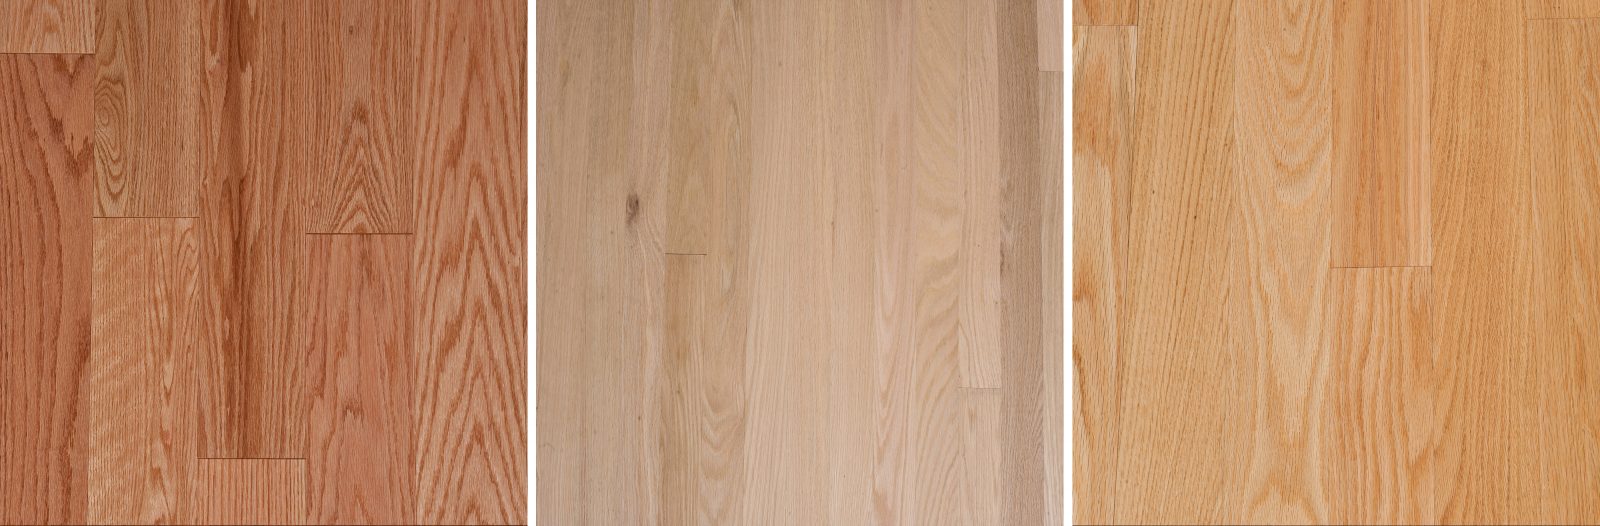 Comparison of Red Oak Hardwood Flooring